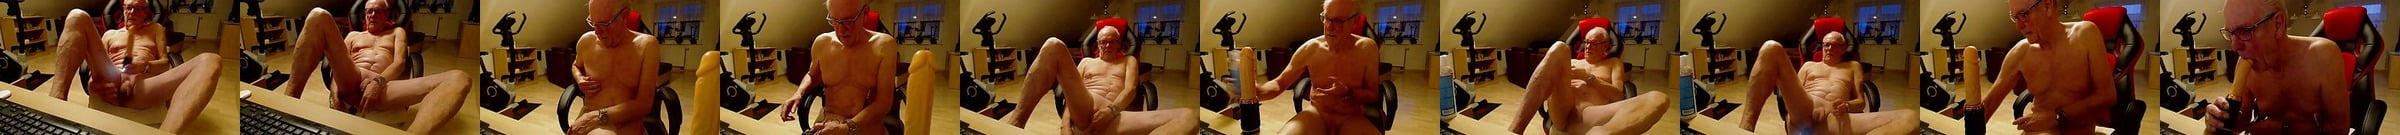 Geiler Bock Free Gay Anal Hd Porn Video 96 Xhamster Xhamster